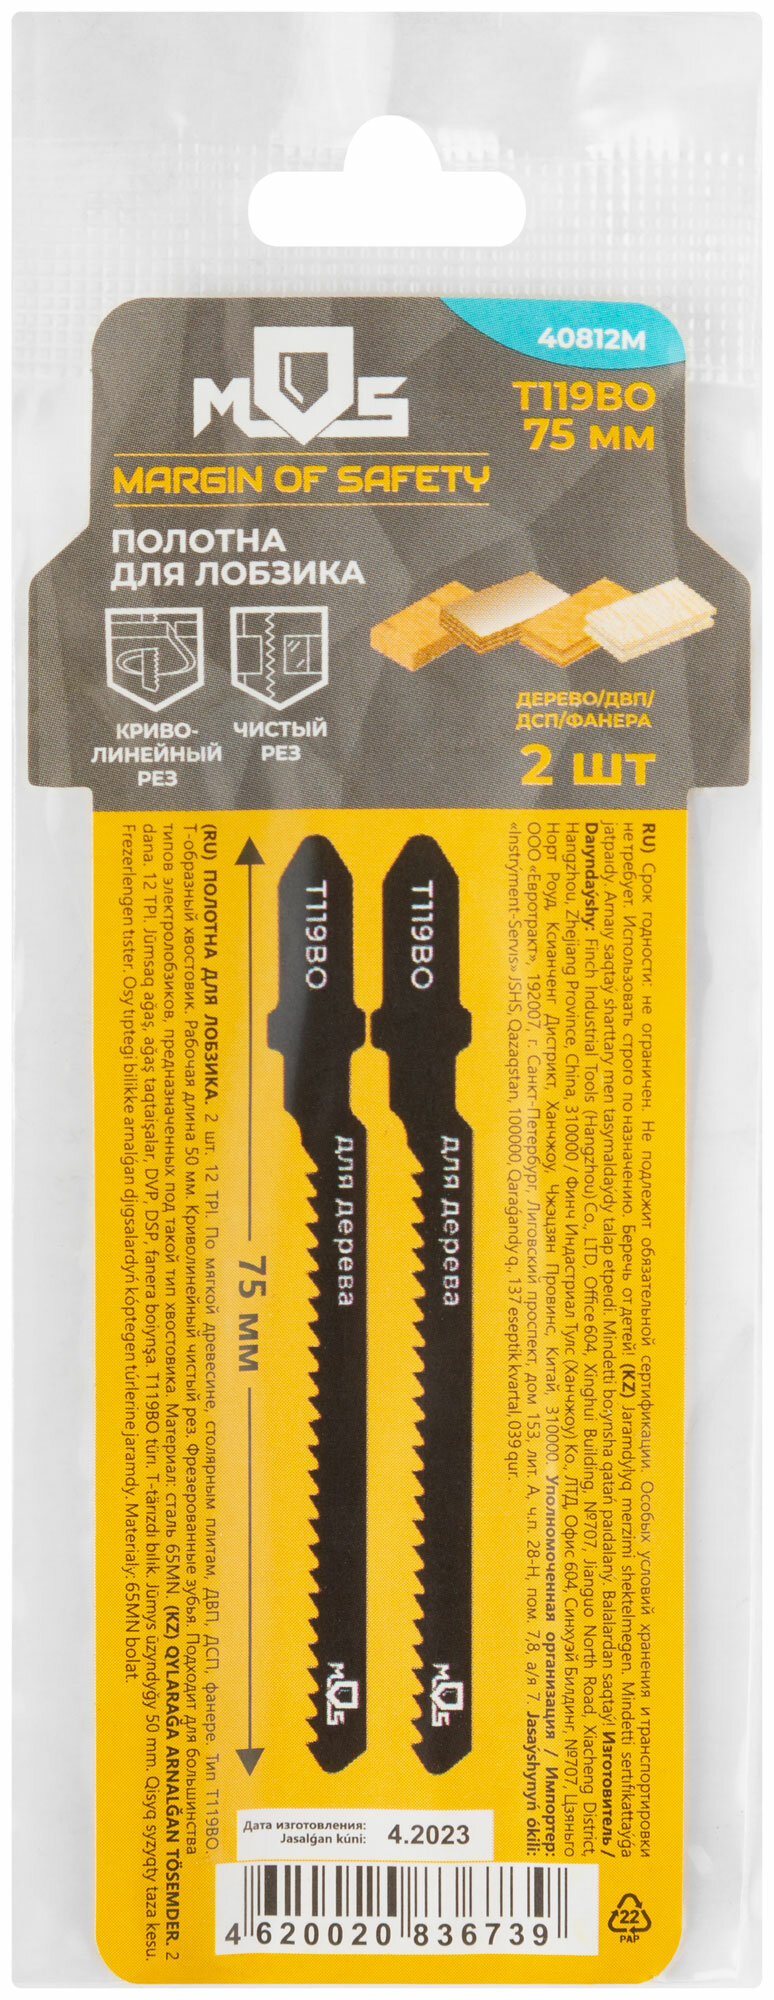 Полотна для эл. лобзика, Т119ВО, по дереву, HCS, 75 мм, 2 шт.